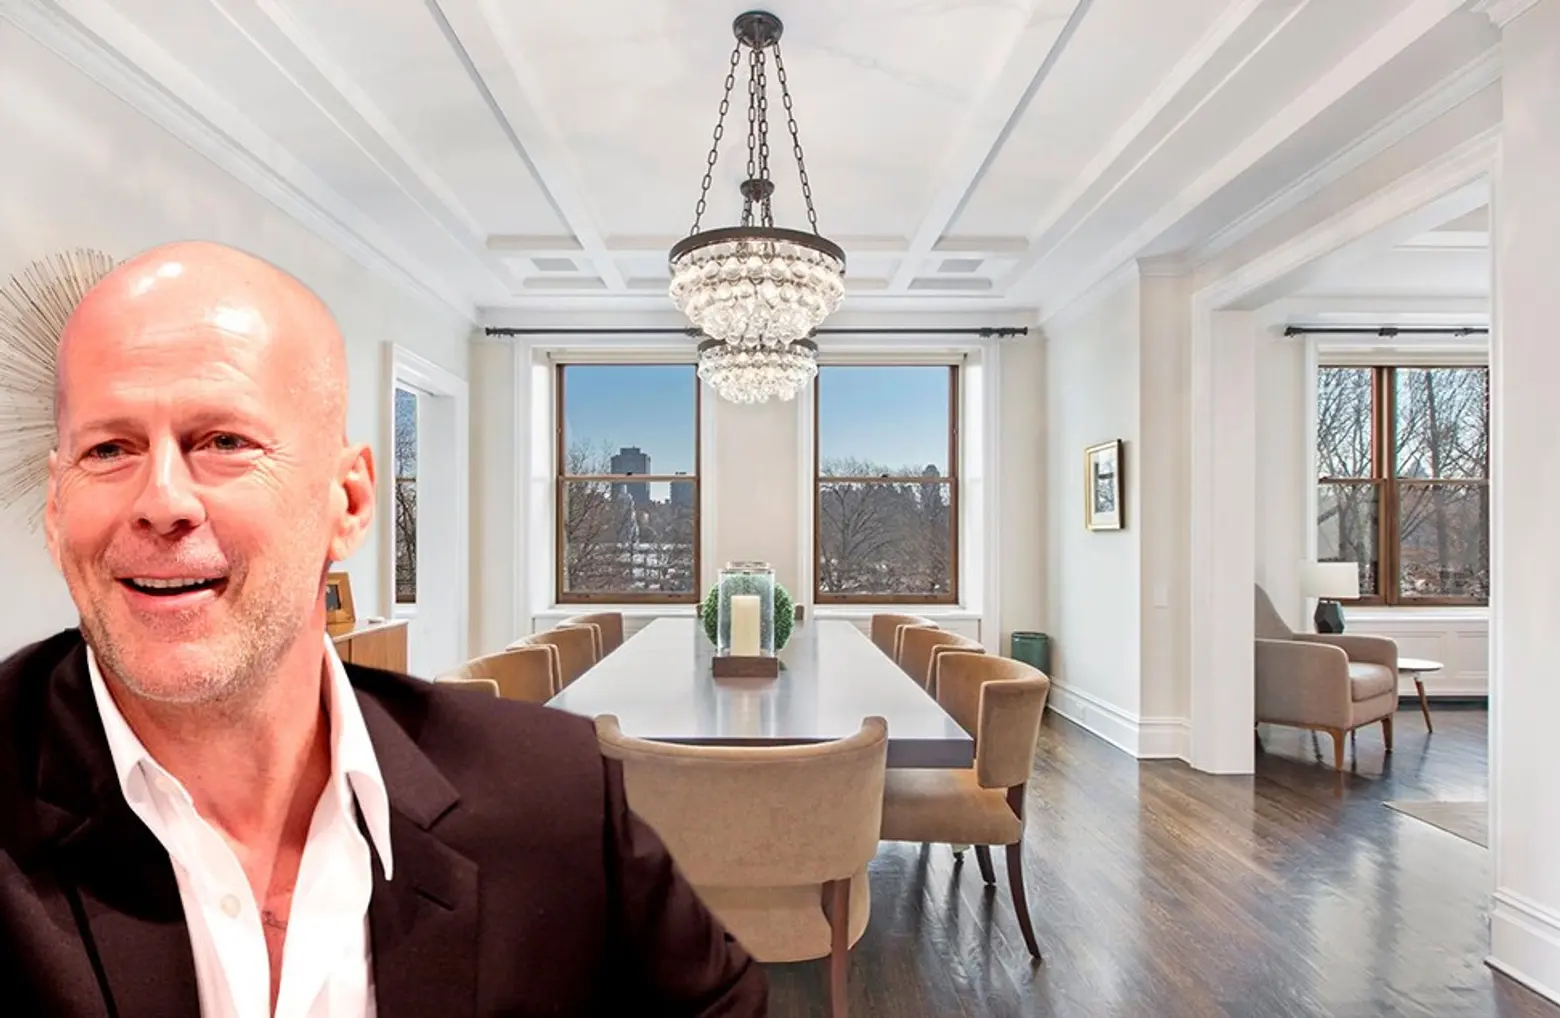 Bruce Willis lists striking six-bedroom Central Park West home for $18M